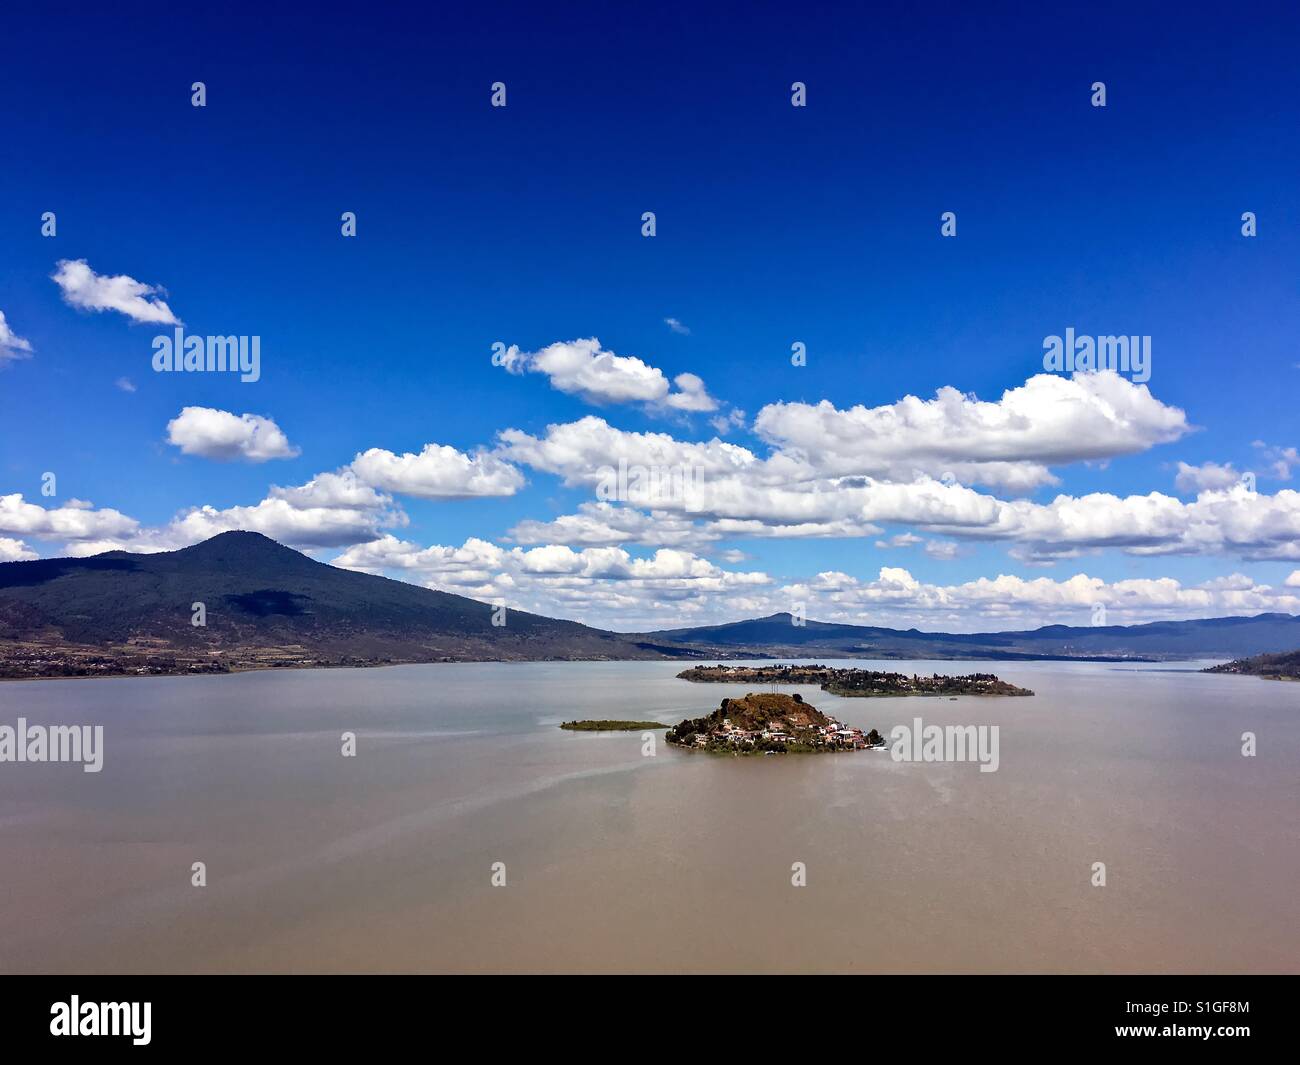 Vue de dessus du lac Patzcuaro en état de Michoacan, Mexique Banque D'Images